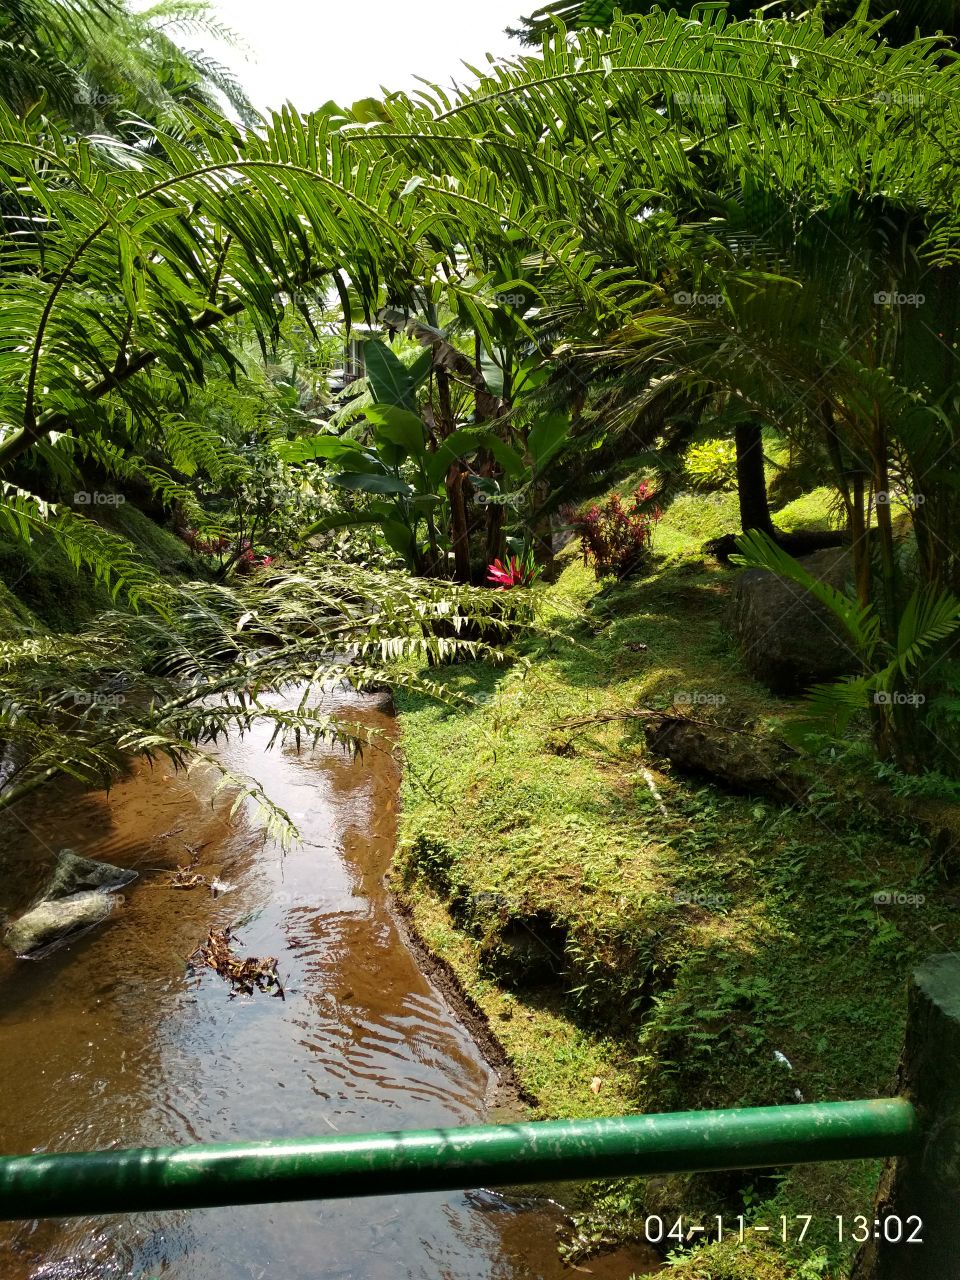 The jungle in karanganyar central java